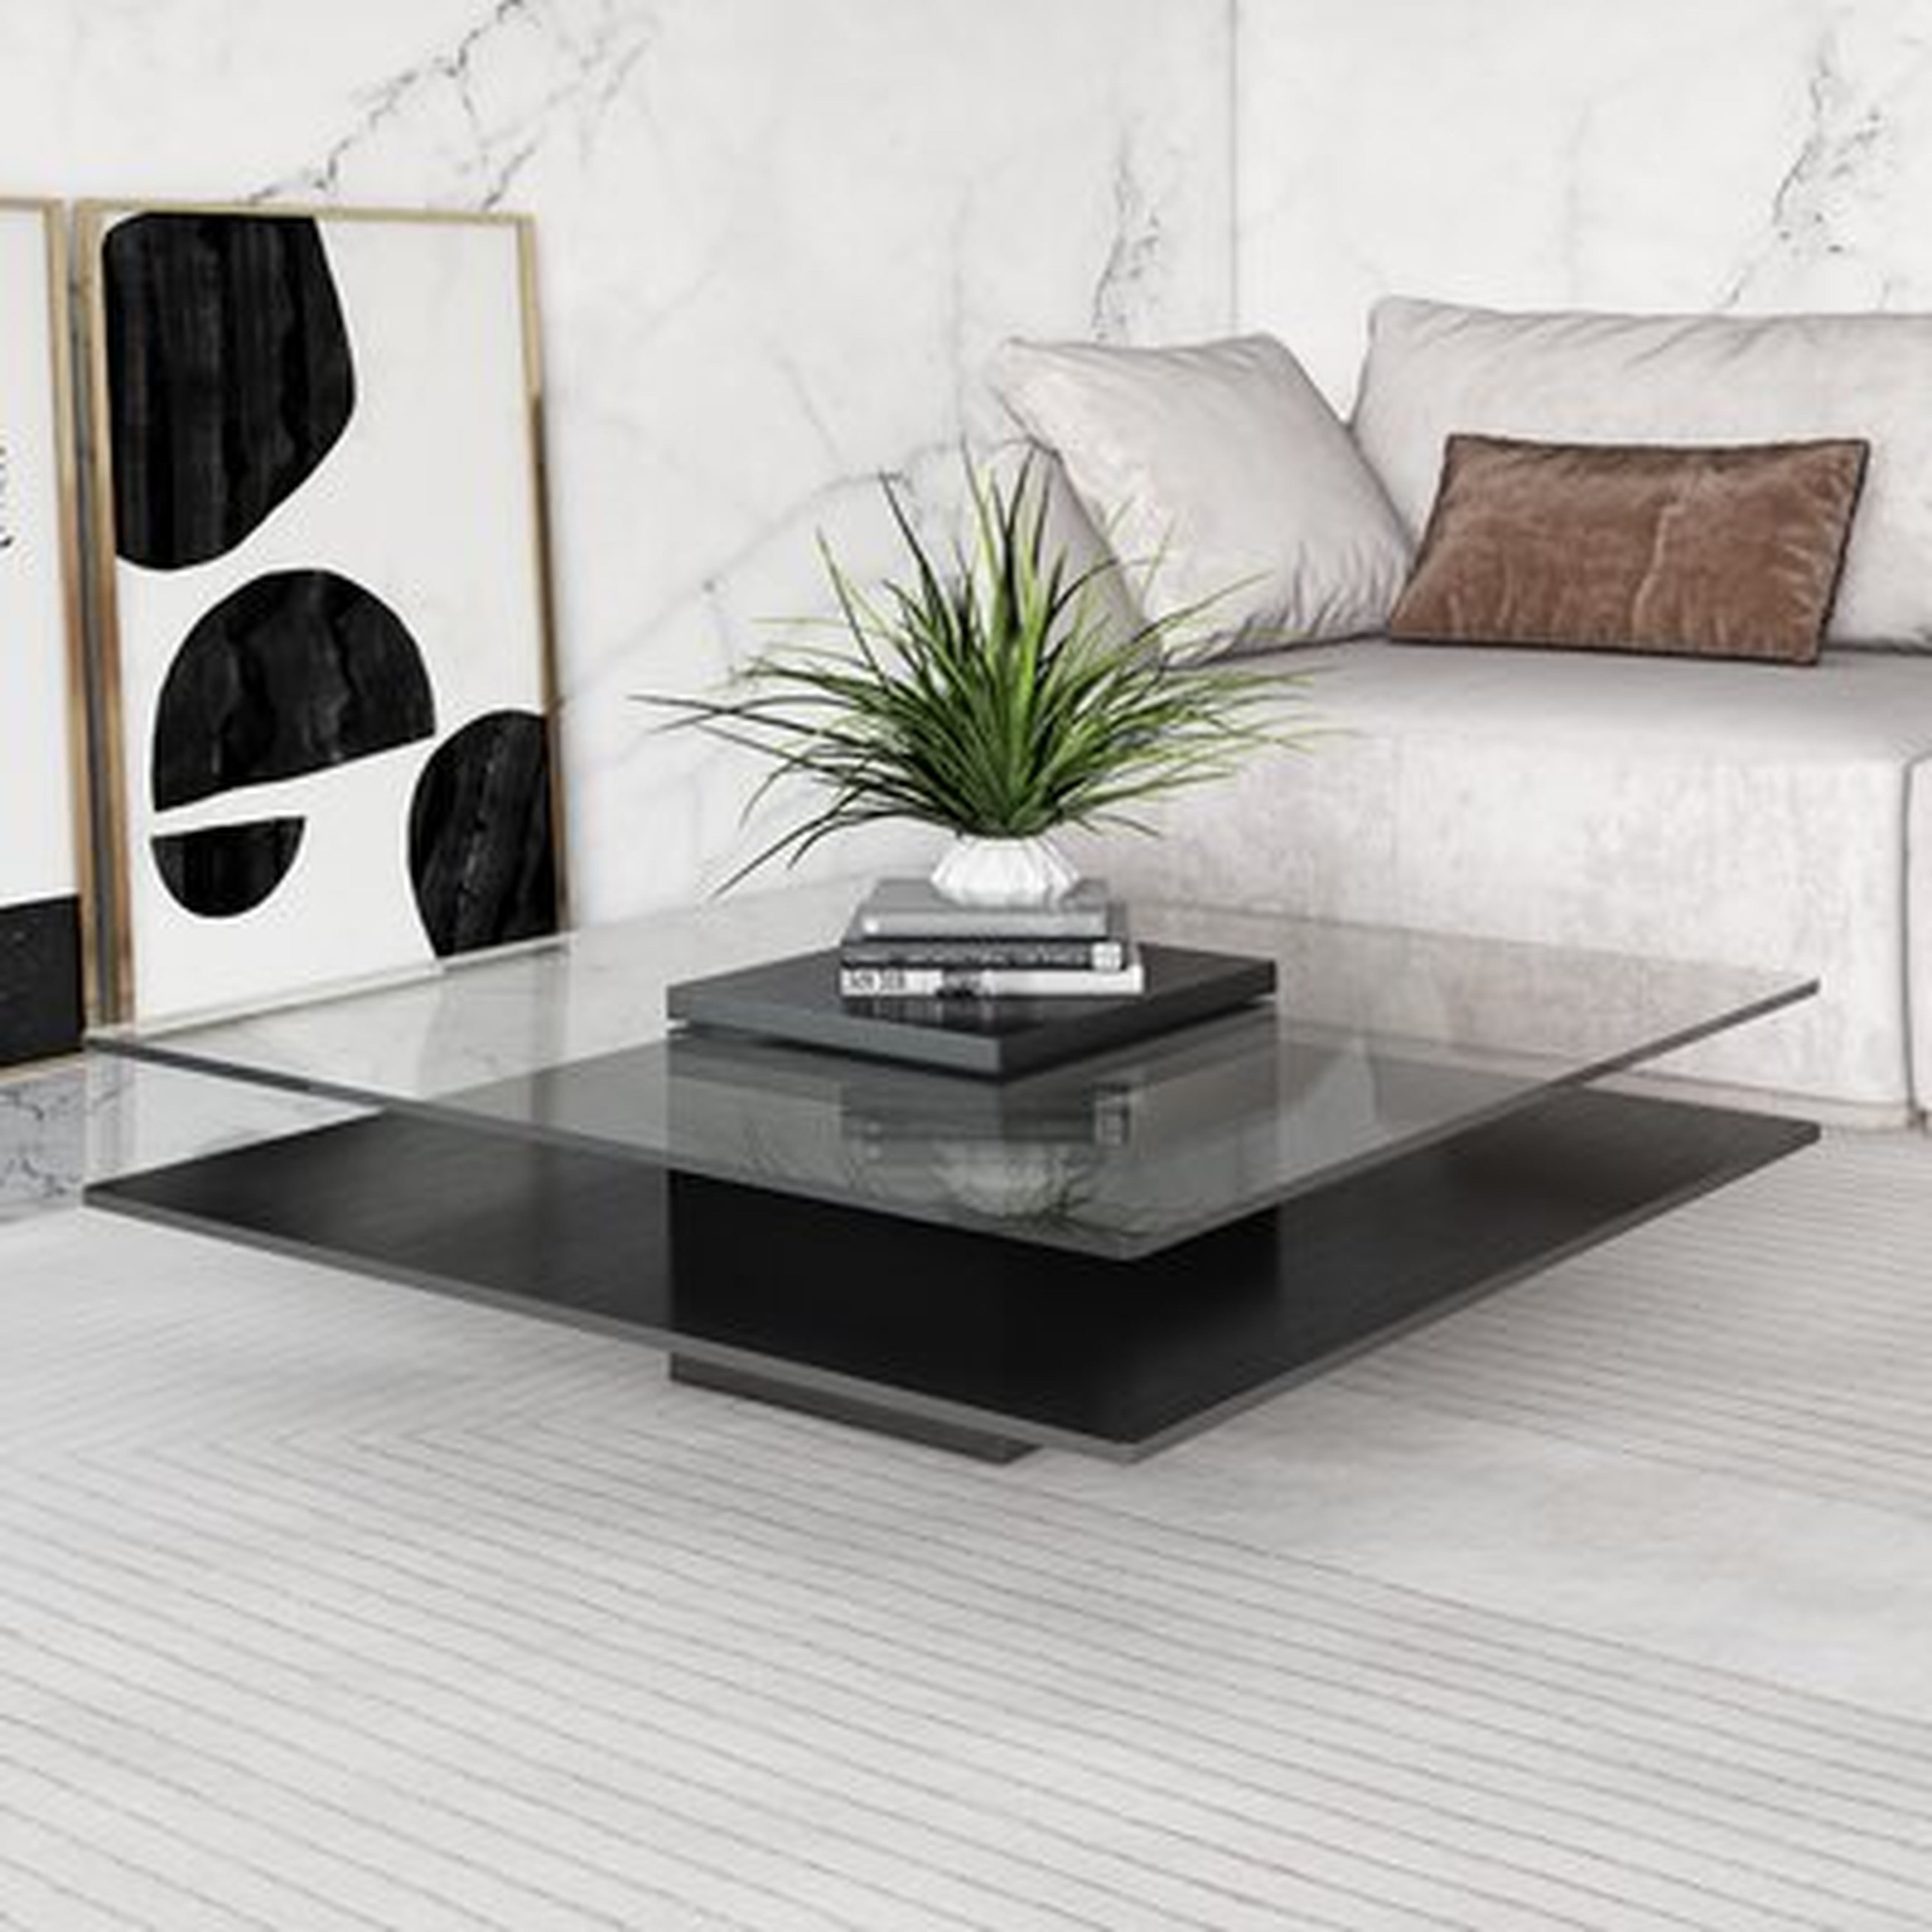 Belafonte Pedestal Coffee Table with Storage - Wayfair